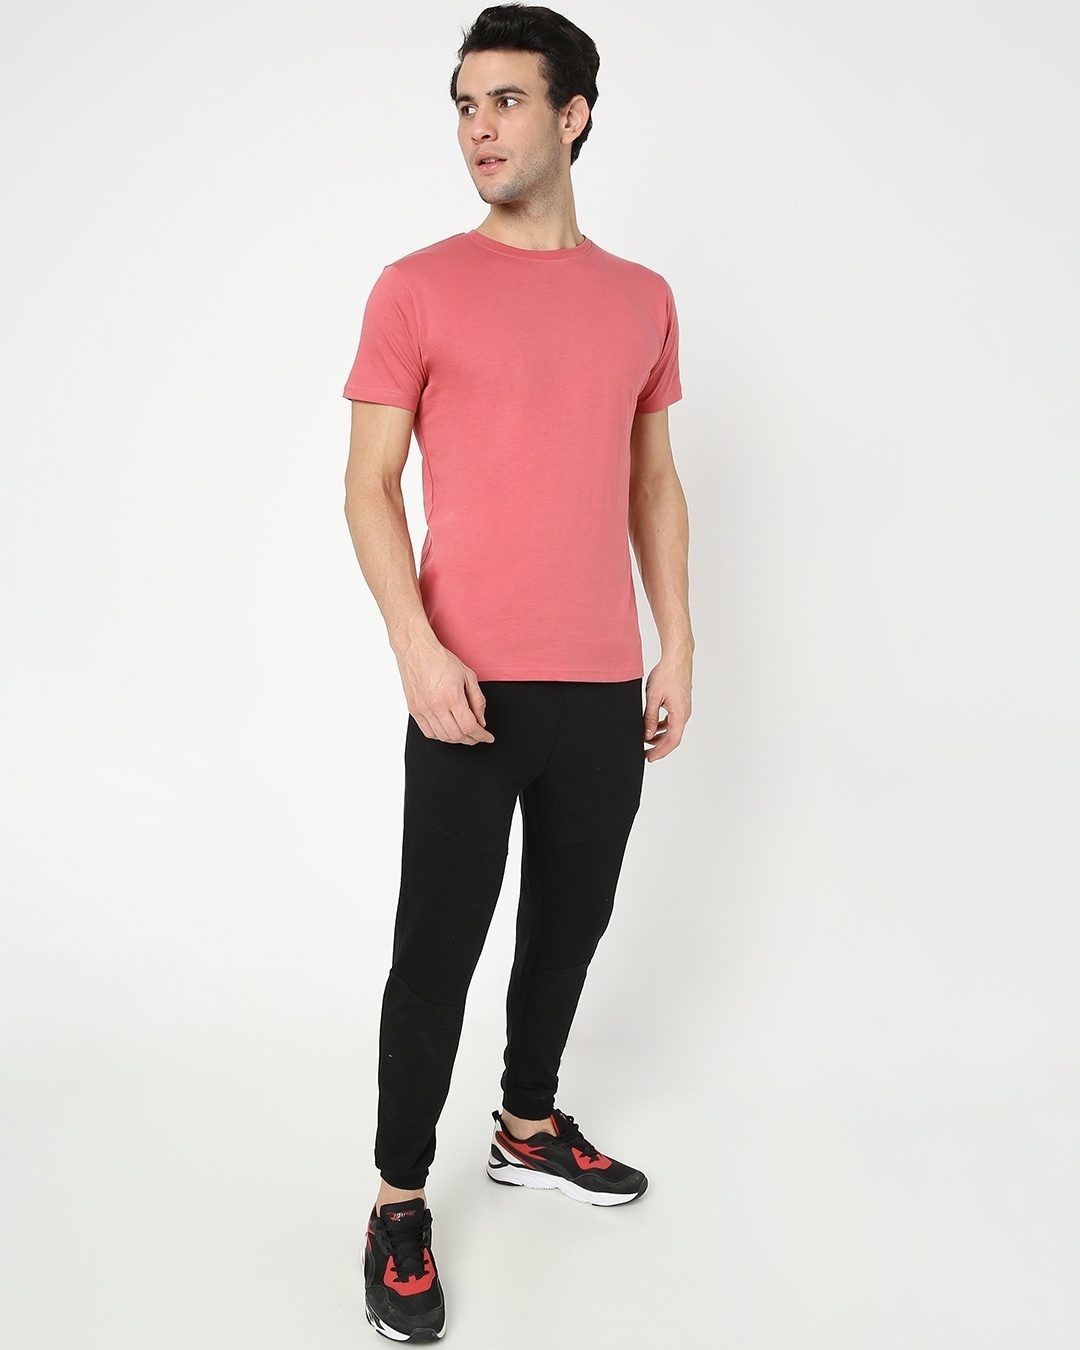 Buy Men's Pink T-shirt for Men pink Online at Bewakoof